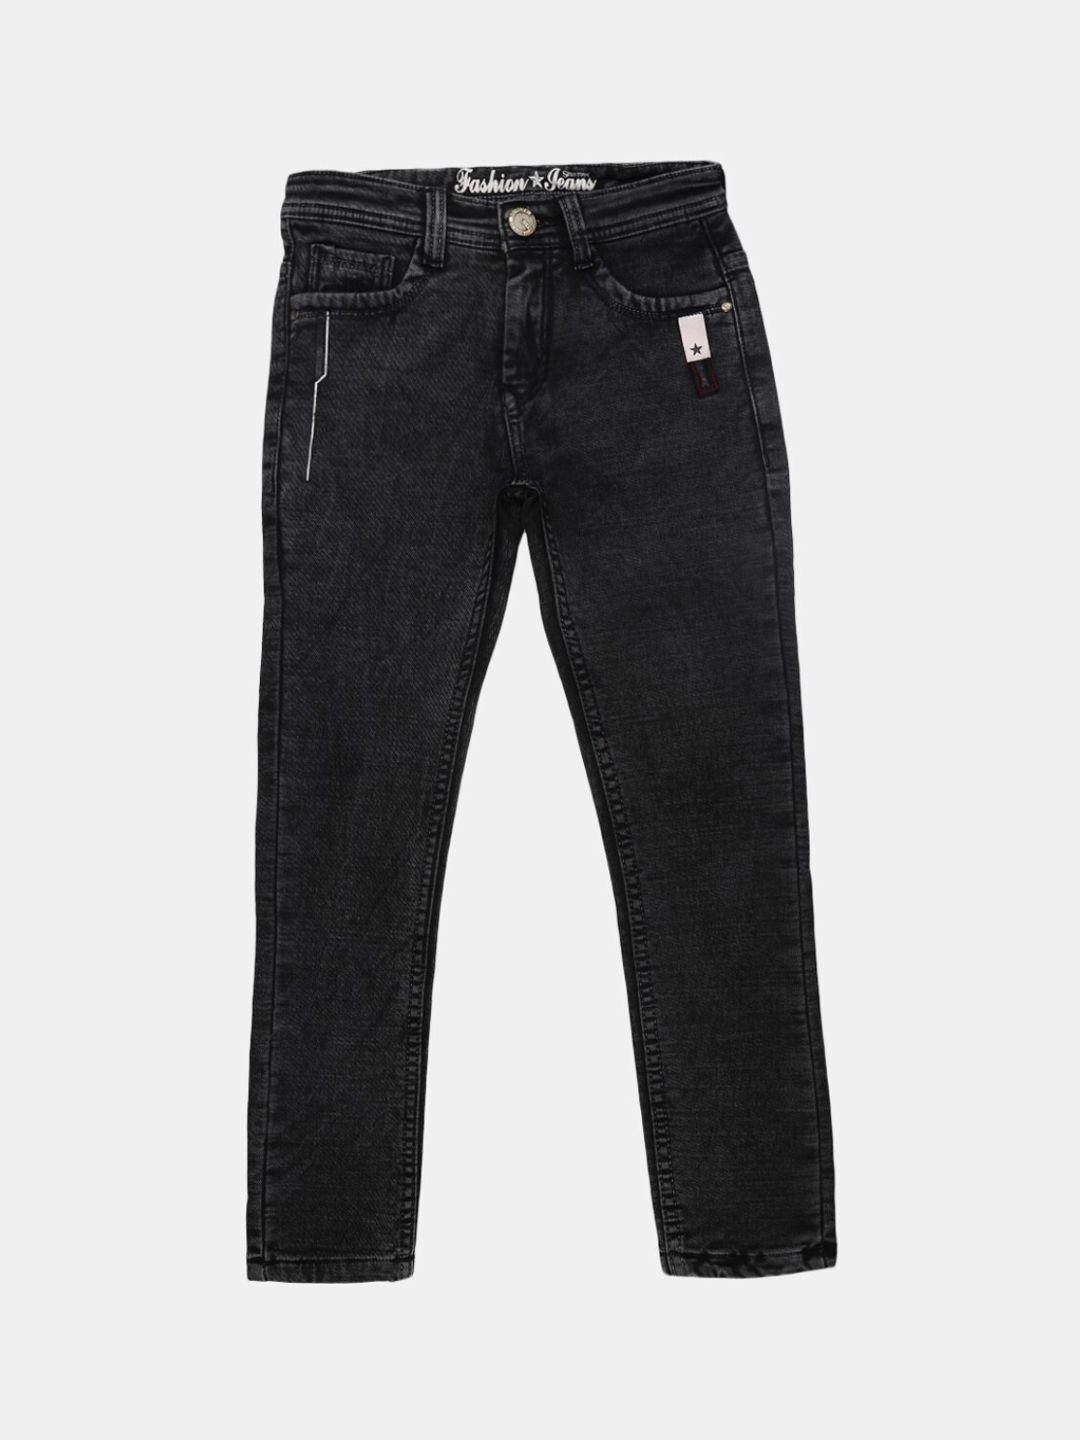 v-mart boys black cotton clean look stretchable jeans